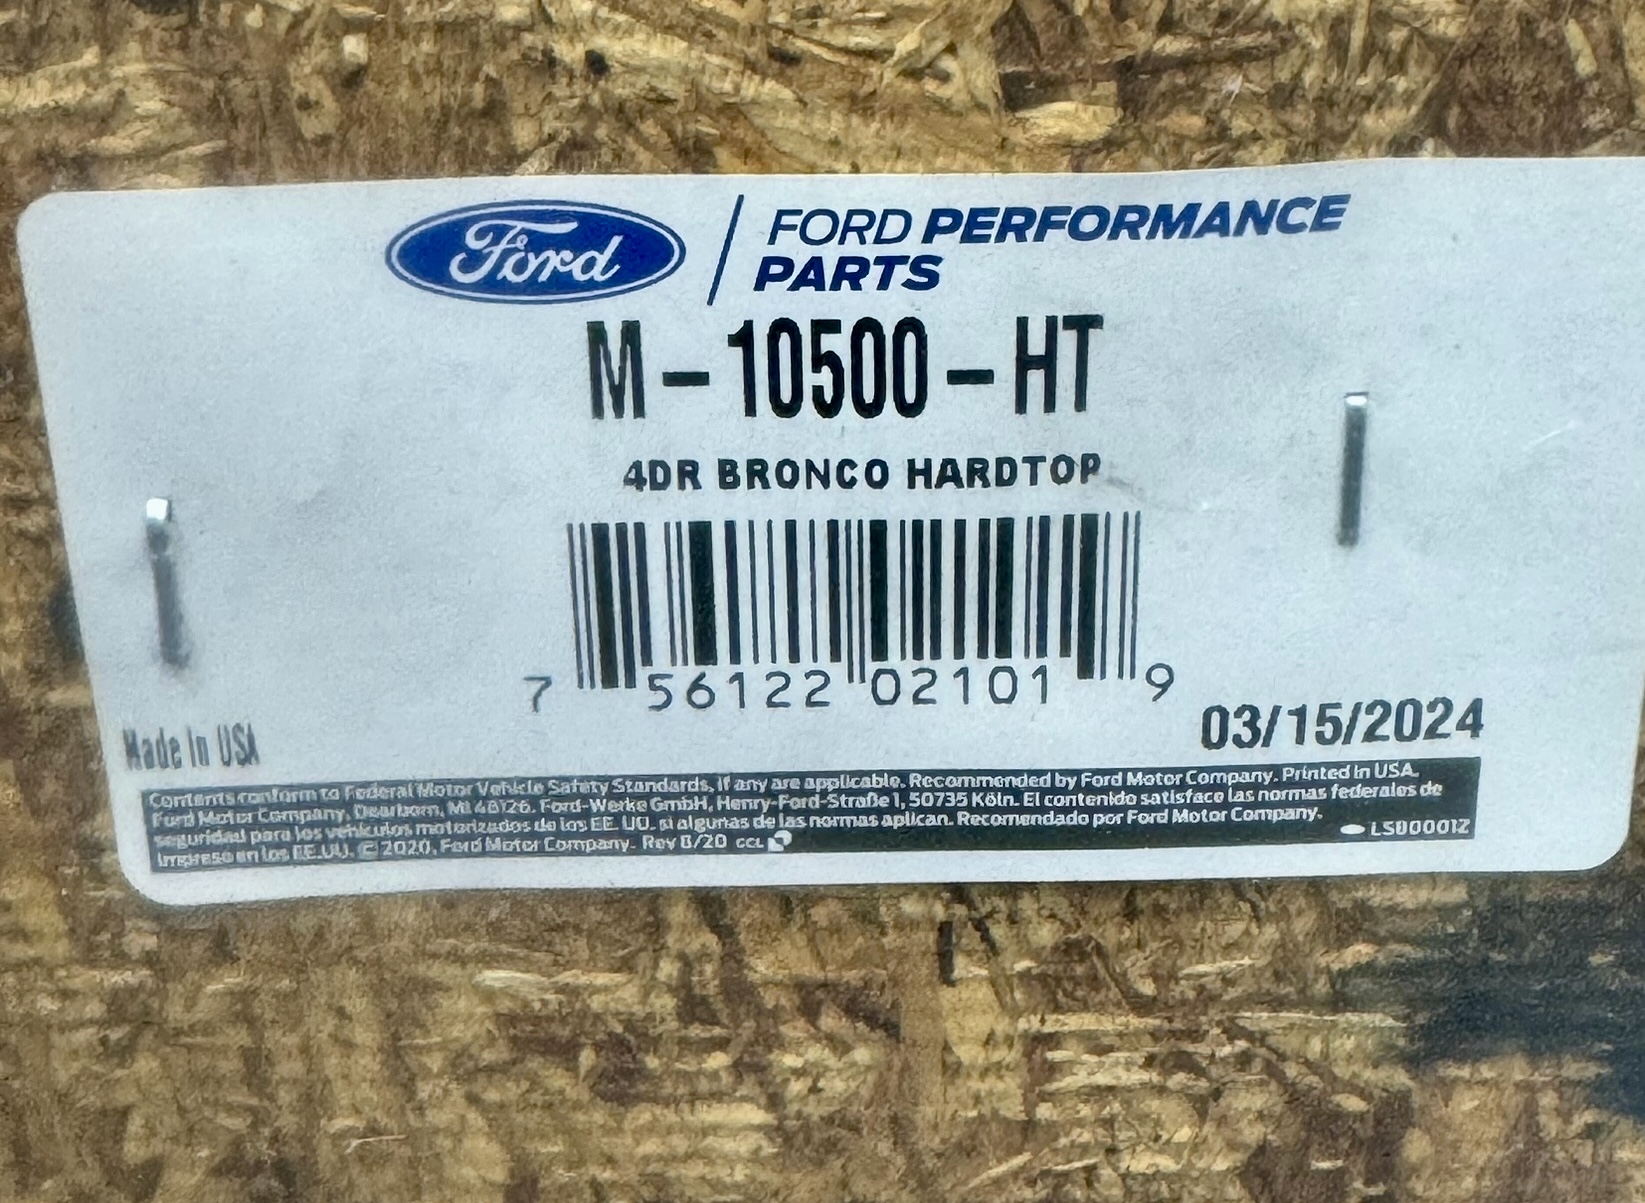 Ford Bronco BIG'o box of Hardtop for our 22' Badlands IMG_5241